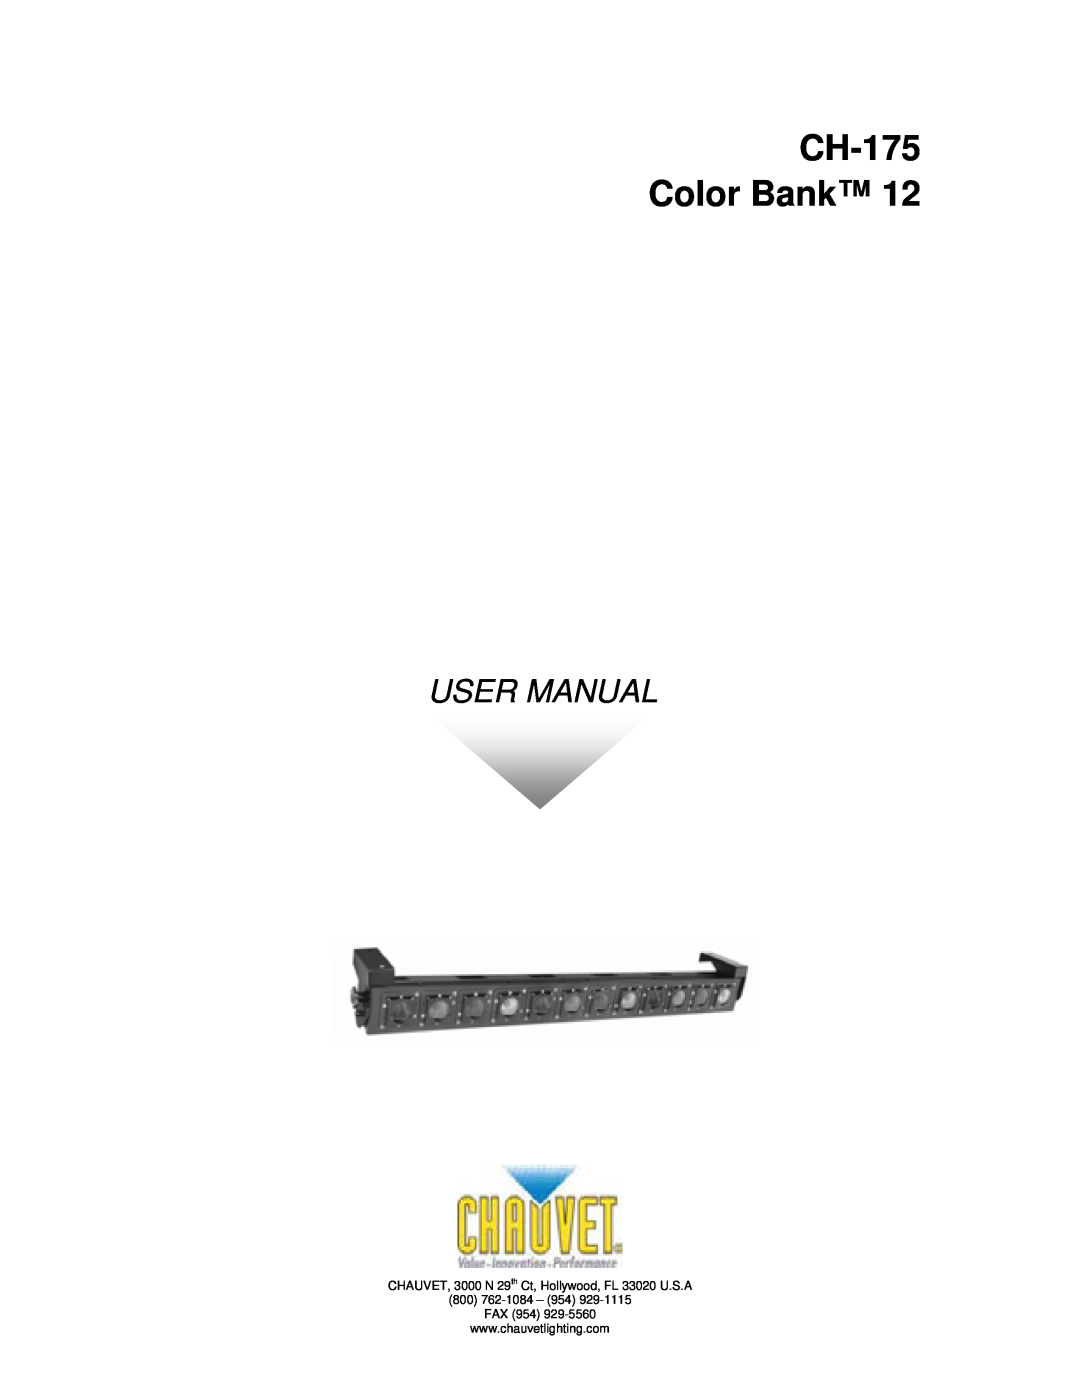 Chauvet user manual CH-175 Color Bank 